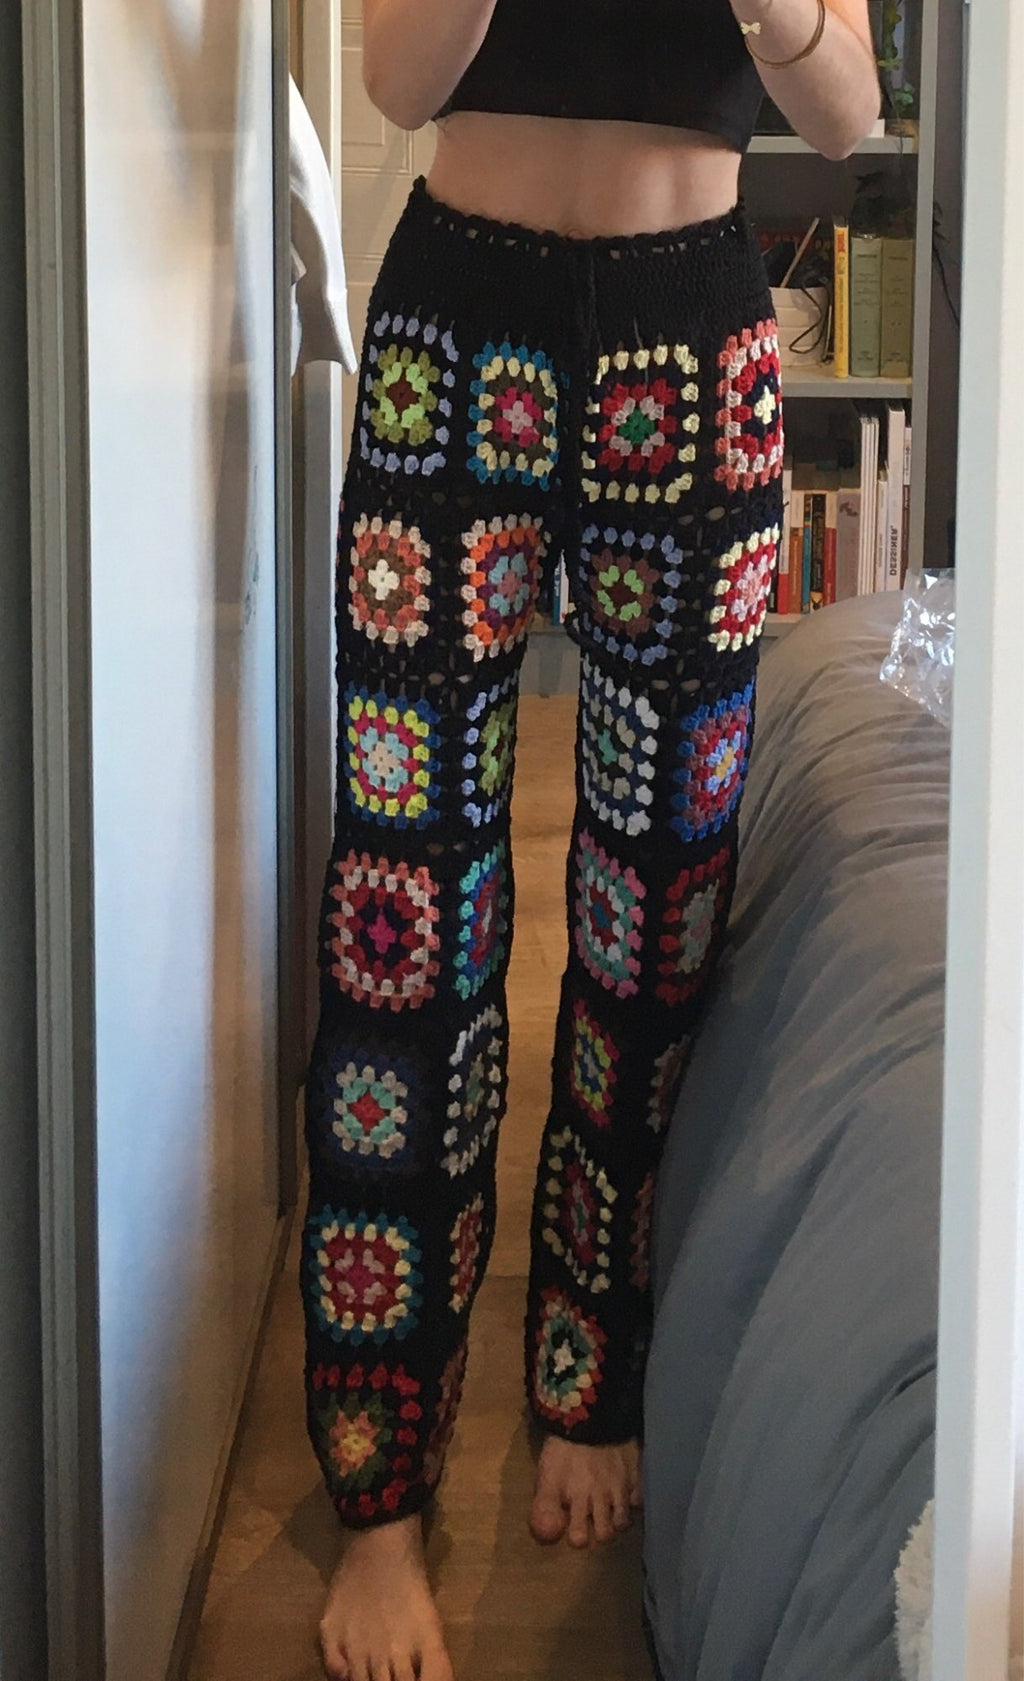 Granny square pants  2 pieces Crochet top and pants woman clothing crochet crop top